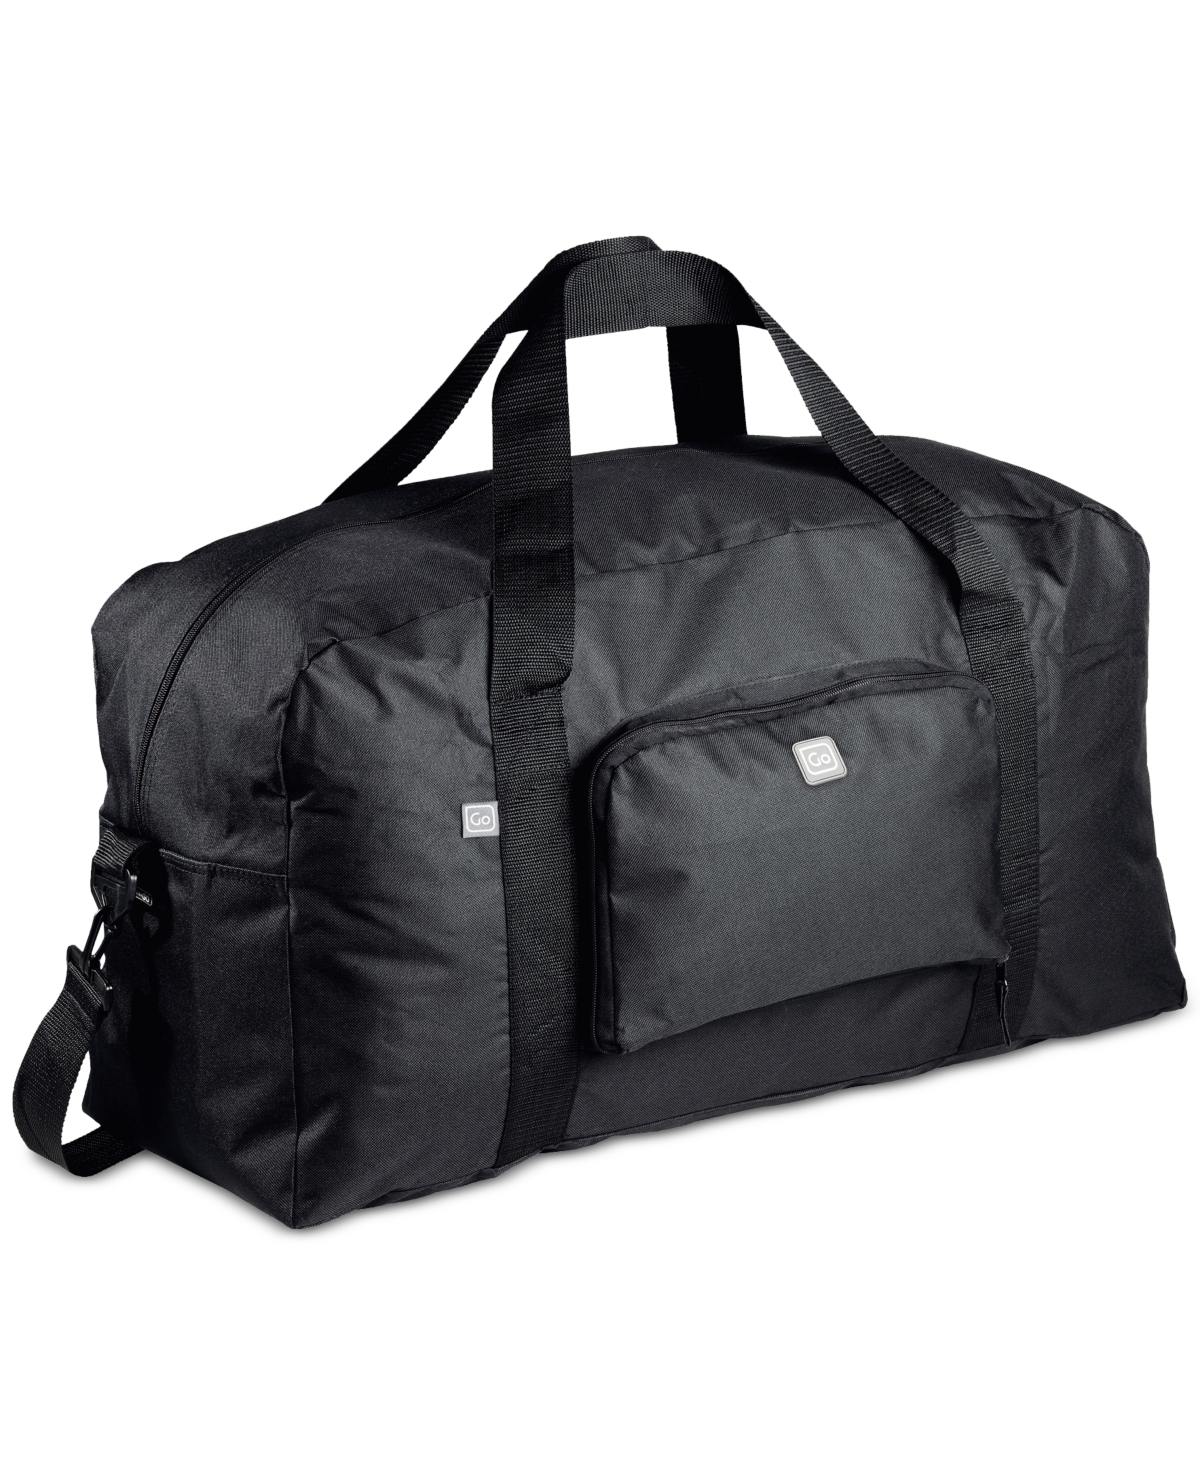 X-Large Adventure Bag - Black